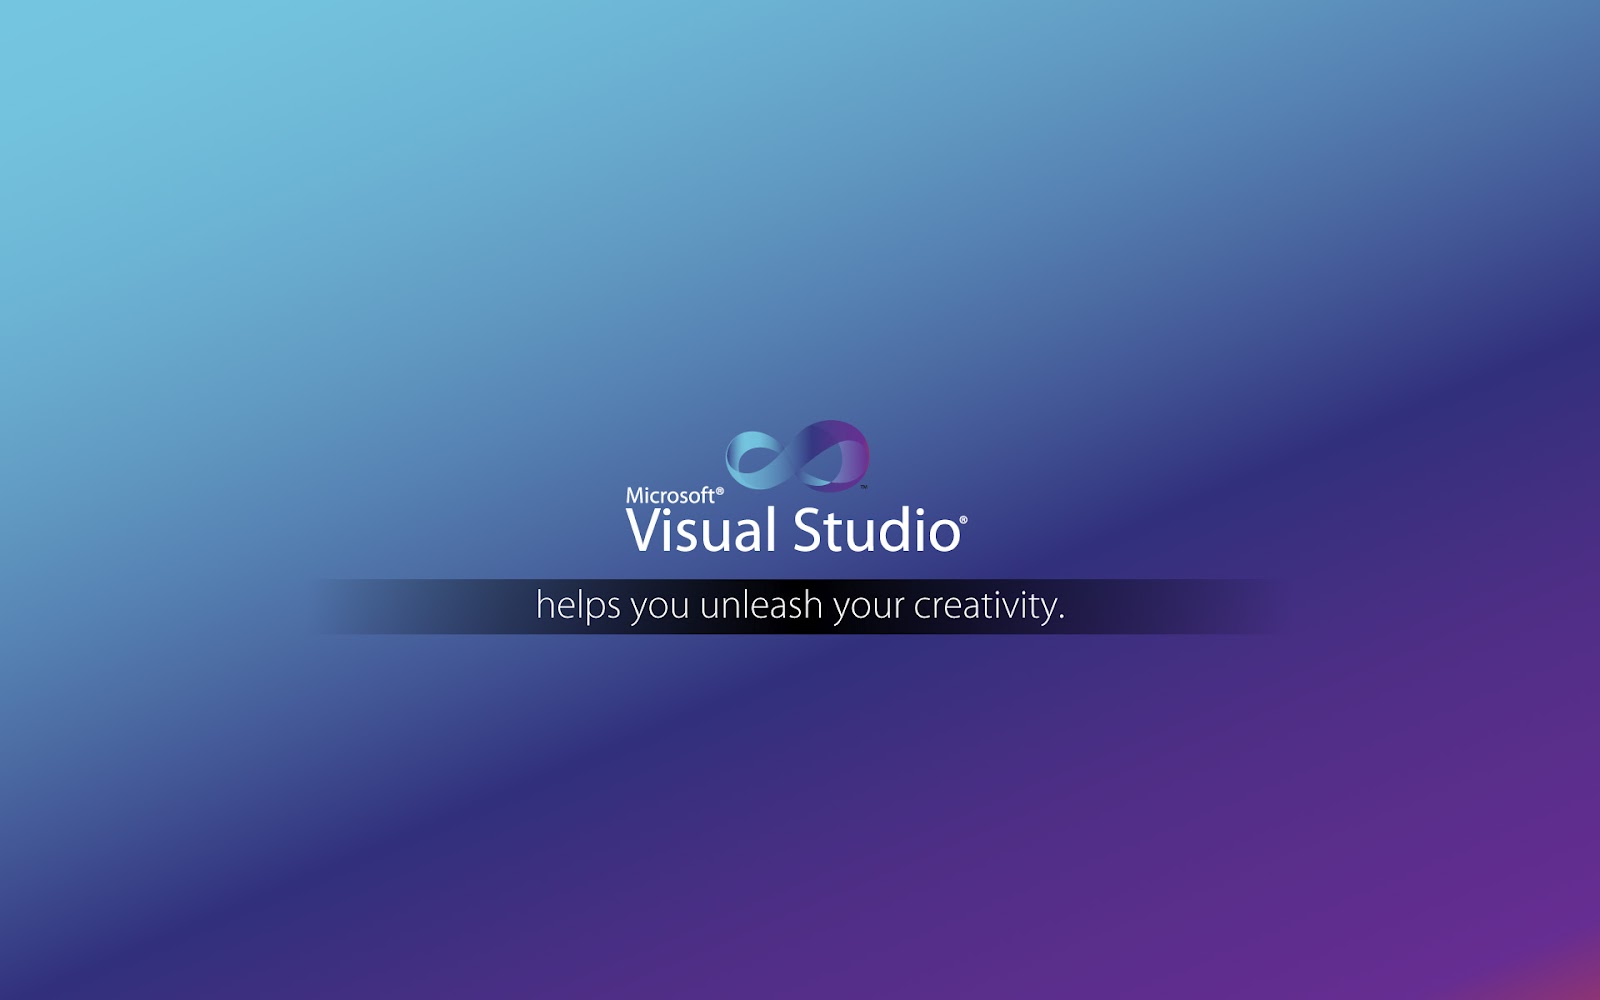 HD Microsoft Visual Studio Wallpaper Tam Super